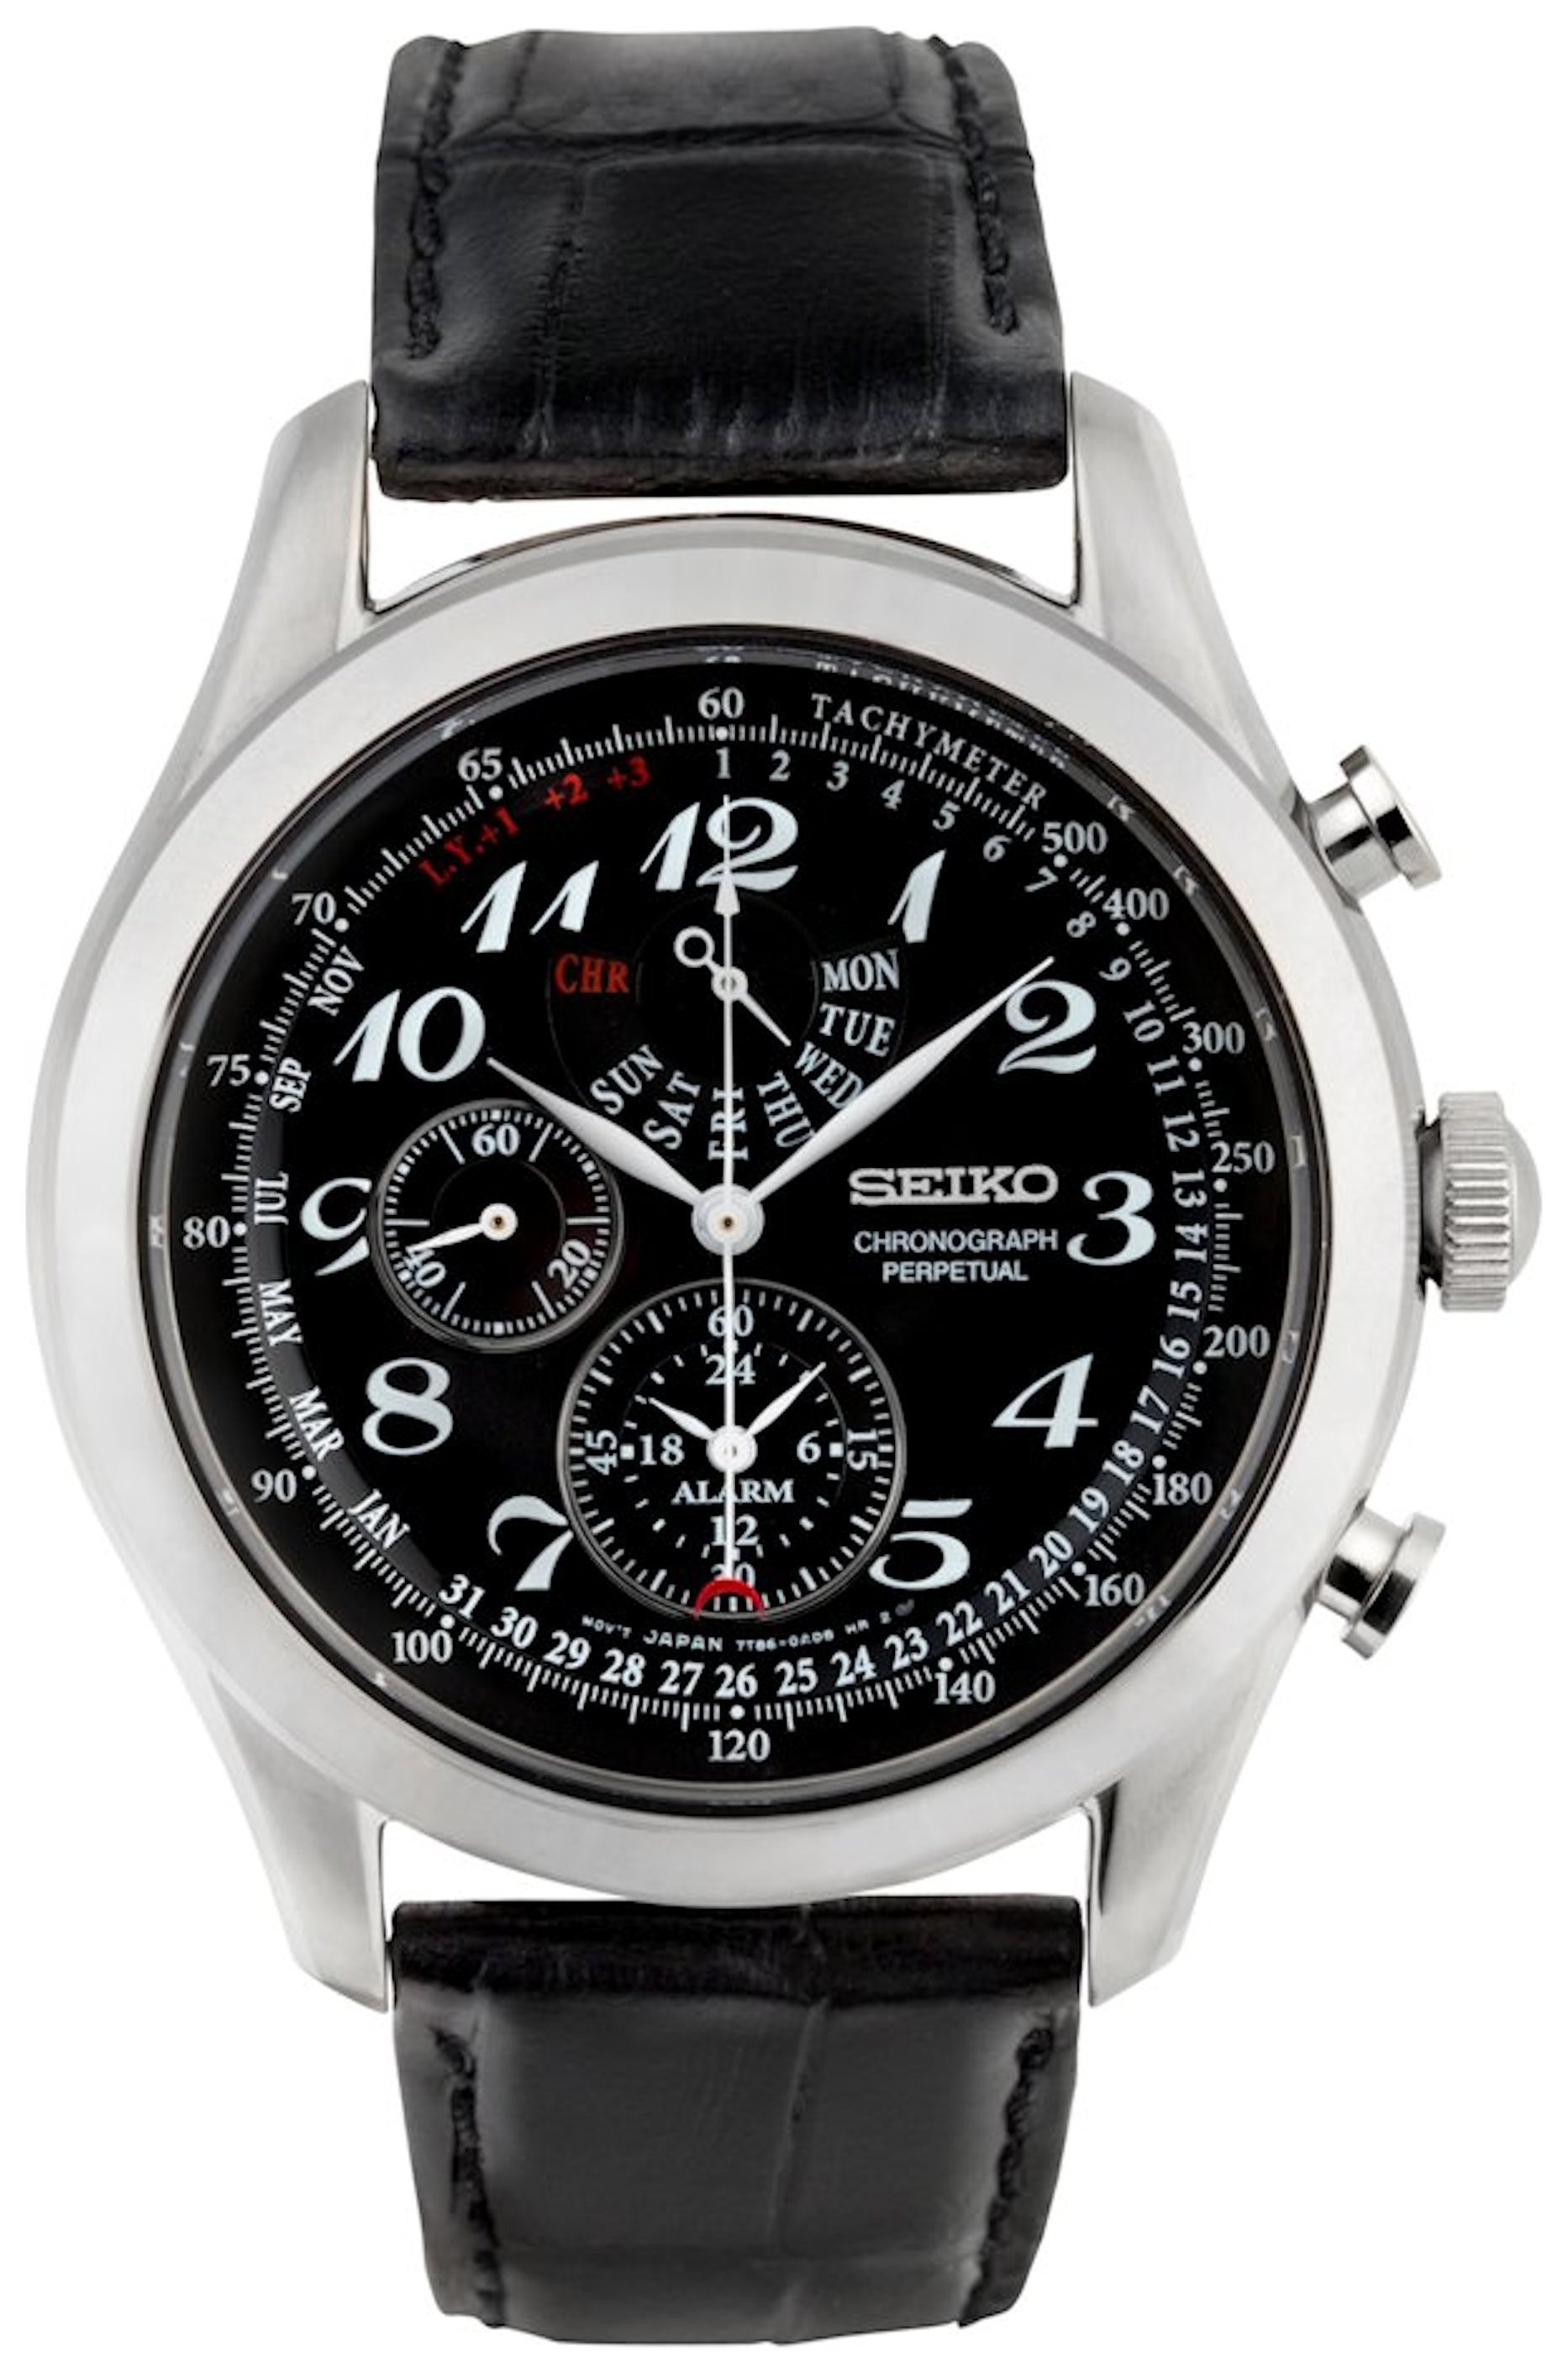 Seiko Men's Perpetual Chronograph Leather Strap Watch